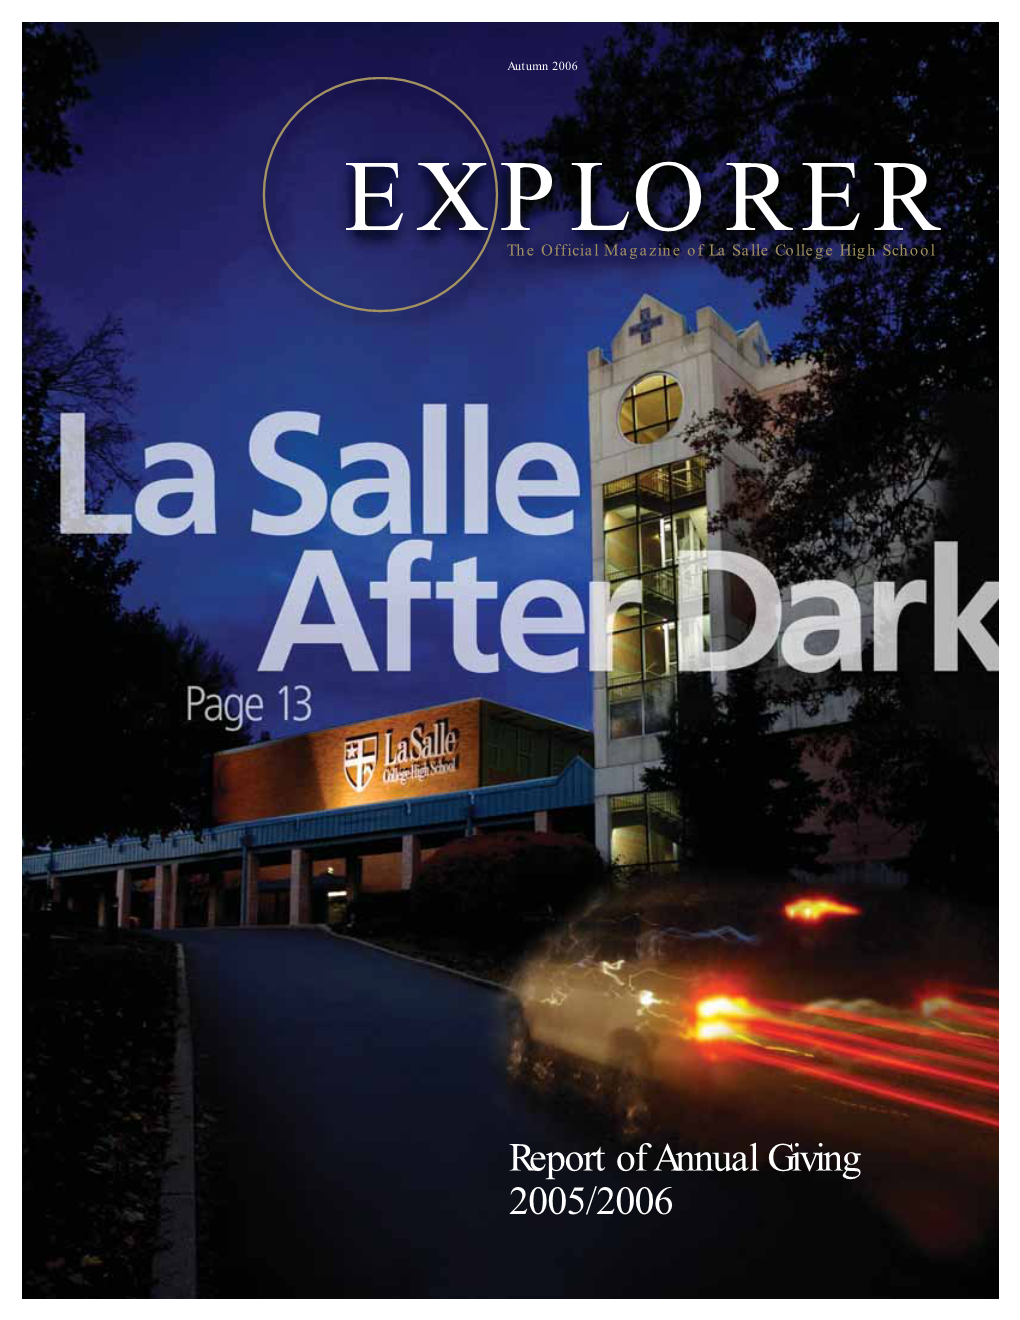 Explorer Autumn 2005 Autumn 2006 EXPLORER the Official Magazine of La Salle College High School